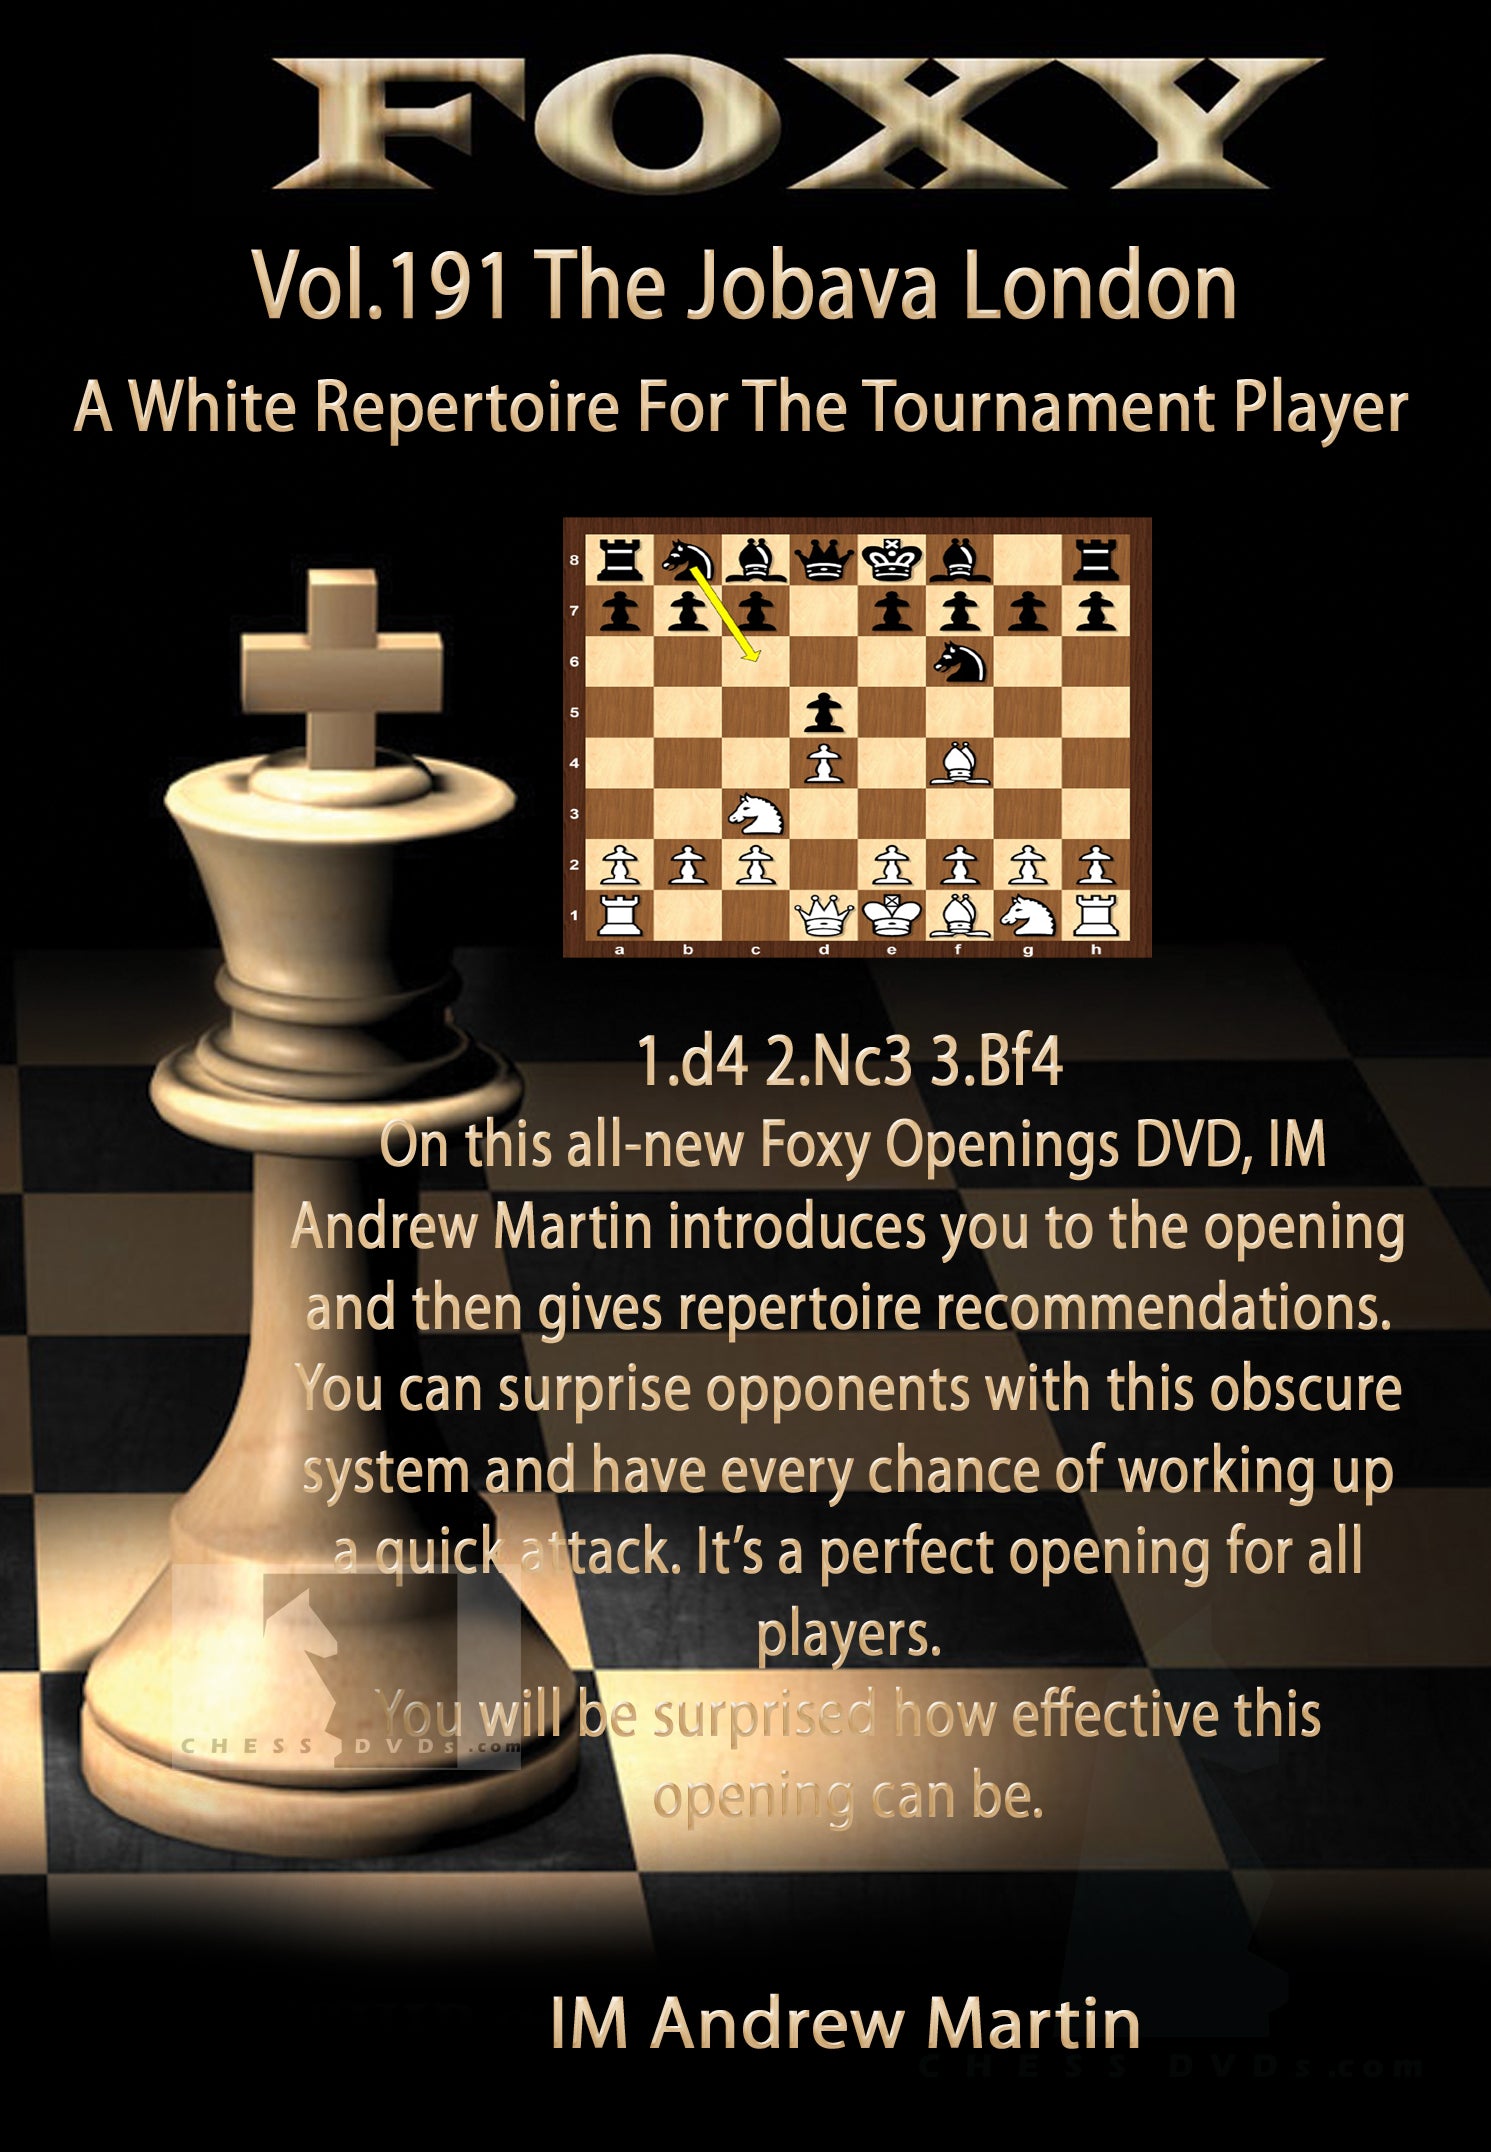 1. d4 Openings for Beginners (White) 